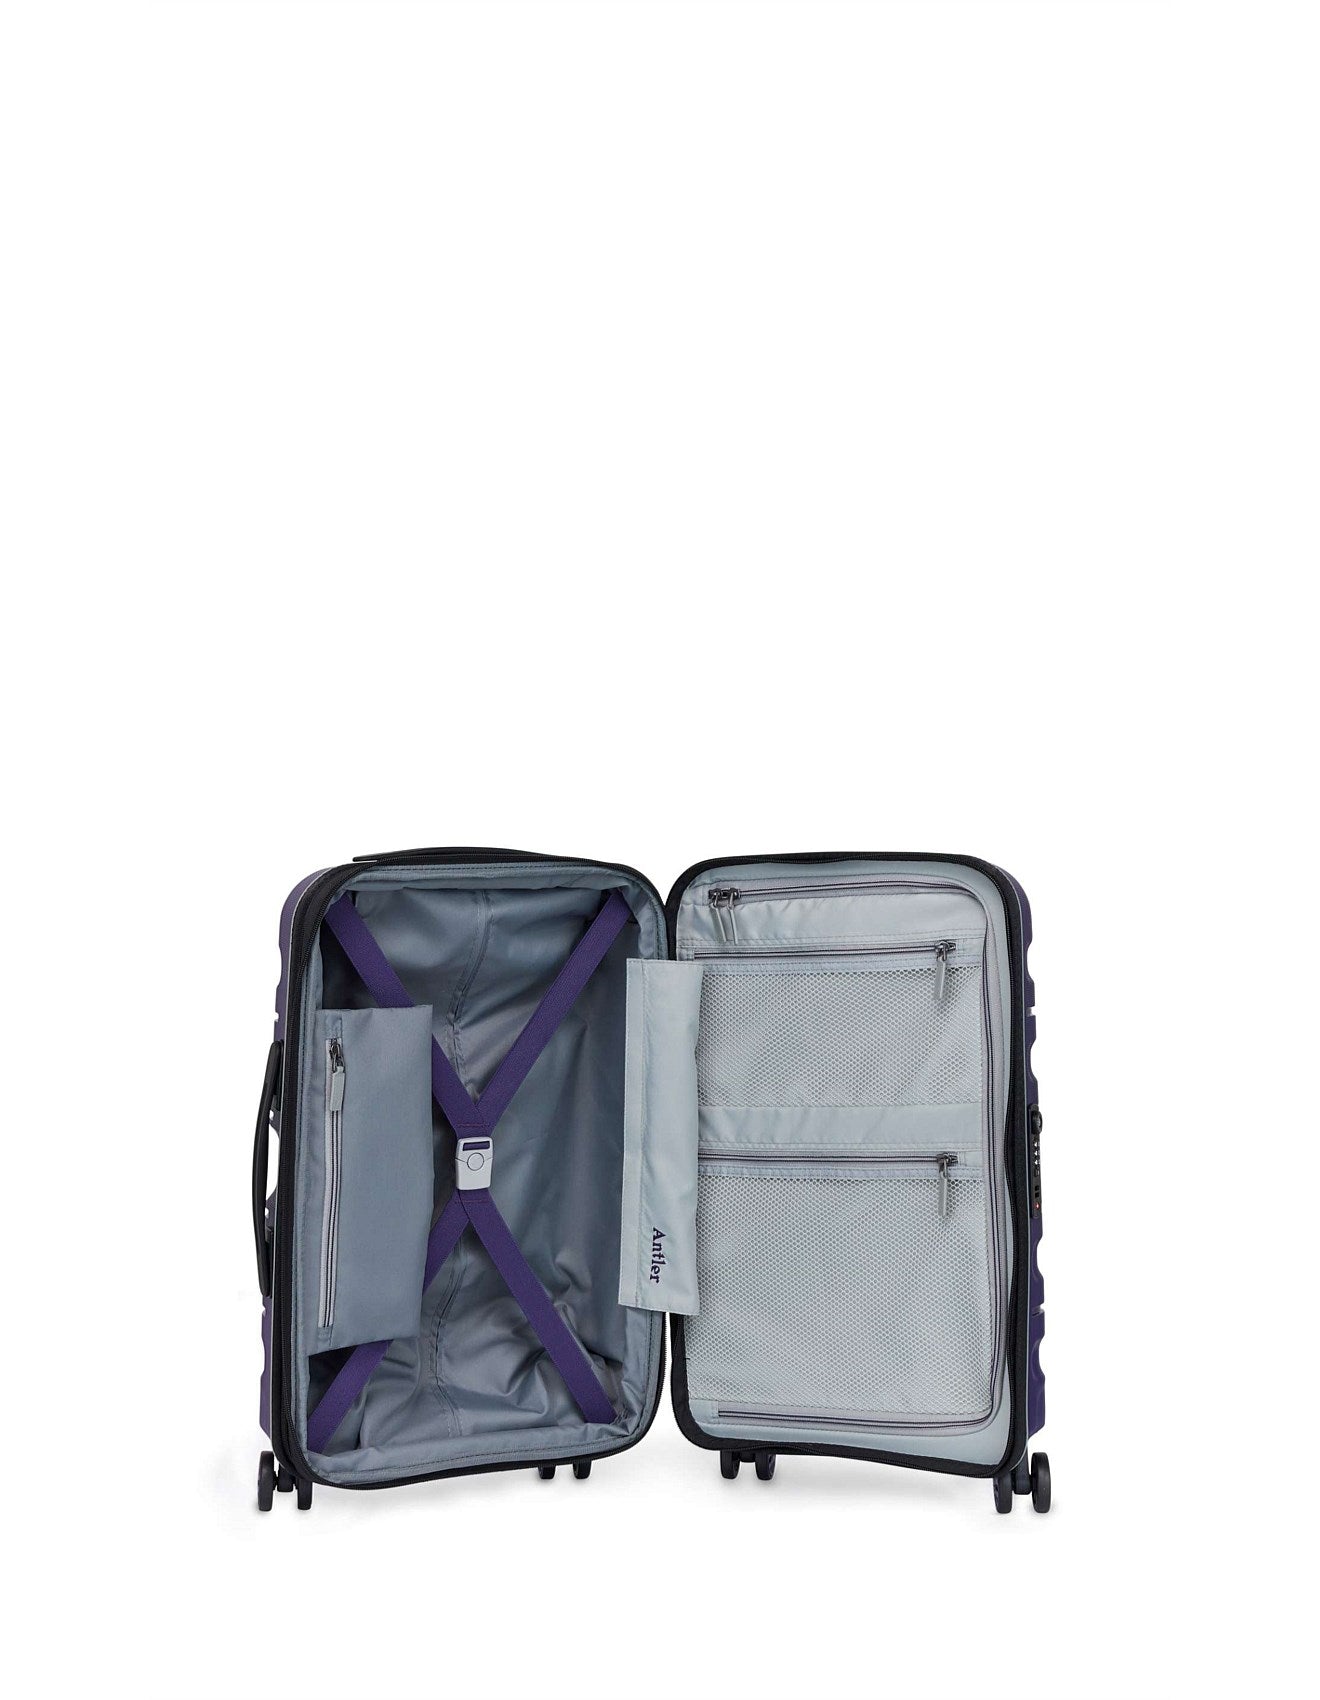 Antler - Lincoln Small 56cm Hardside 4 Wheel Suitcase - Plum